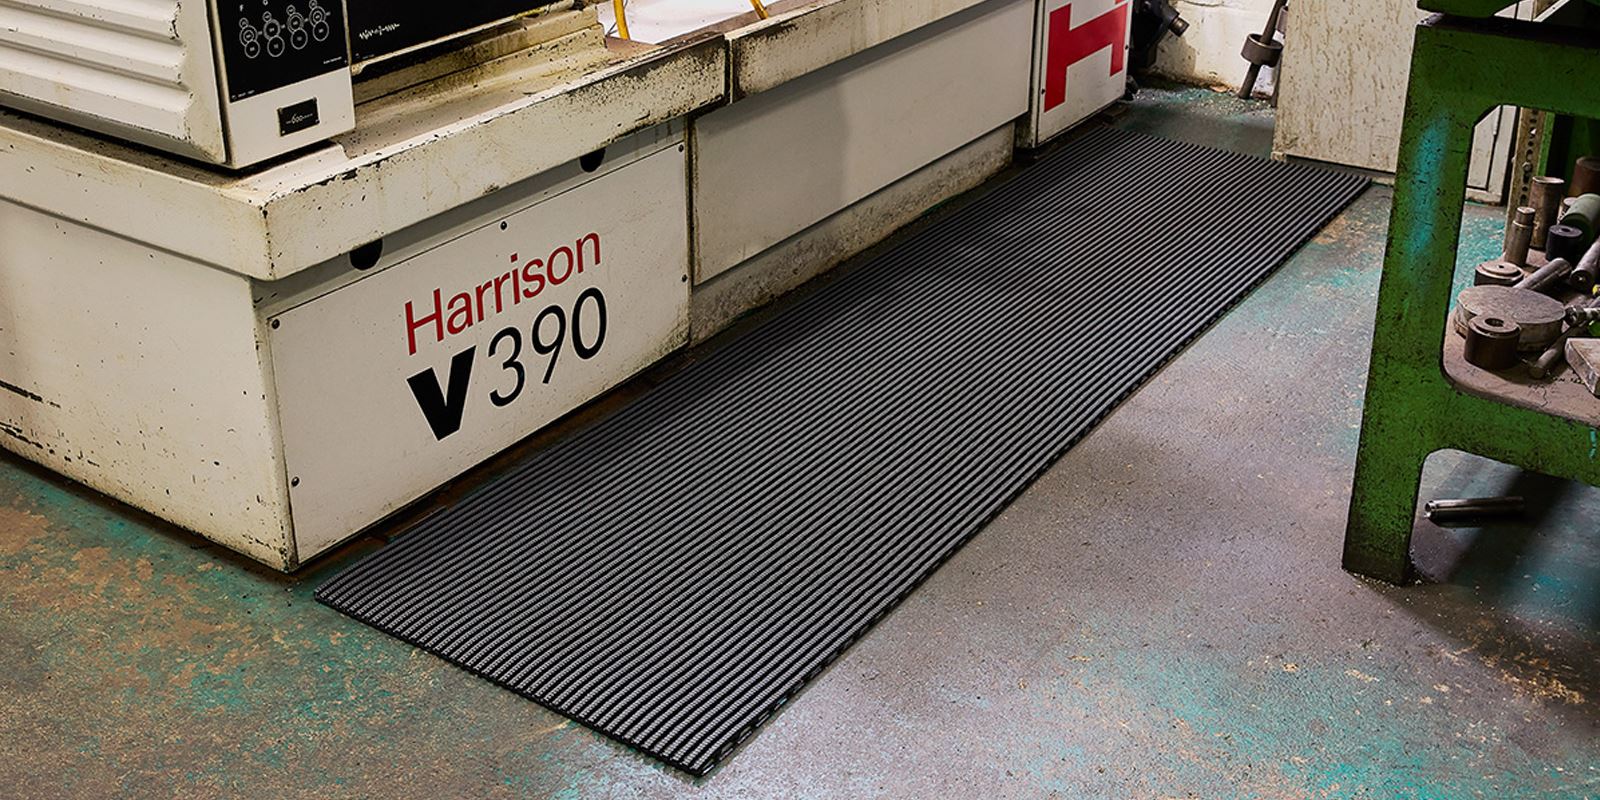 Greatmats Vynagrip Heavy Duty Industrial Mat | Black | Slip Resistant, Anti Fatigue PVC | 2x33 ft Roll | 106 lbs | Pattern: Open Grid | Oil Resistant